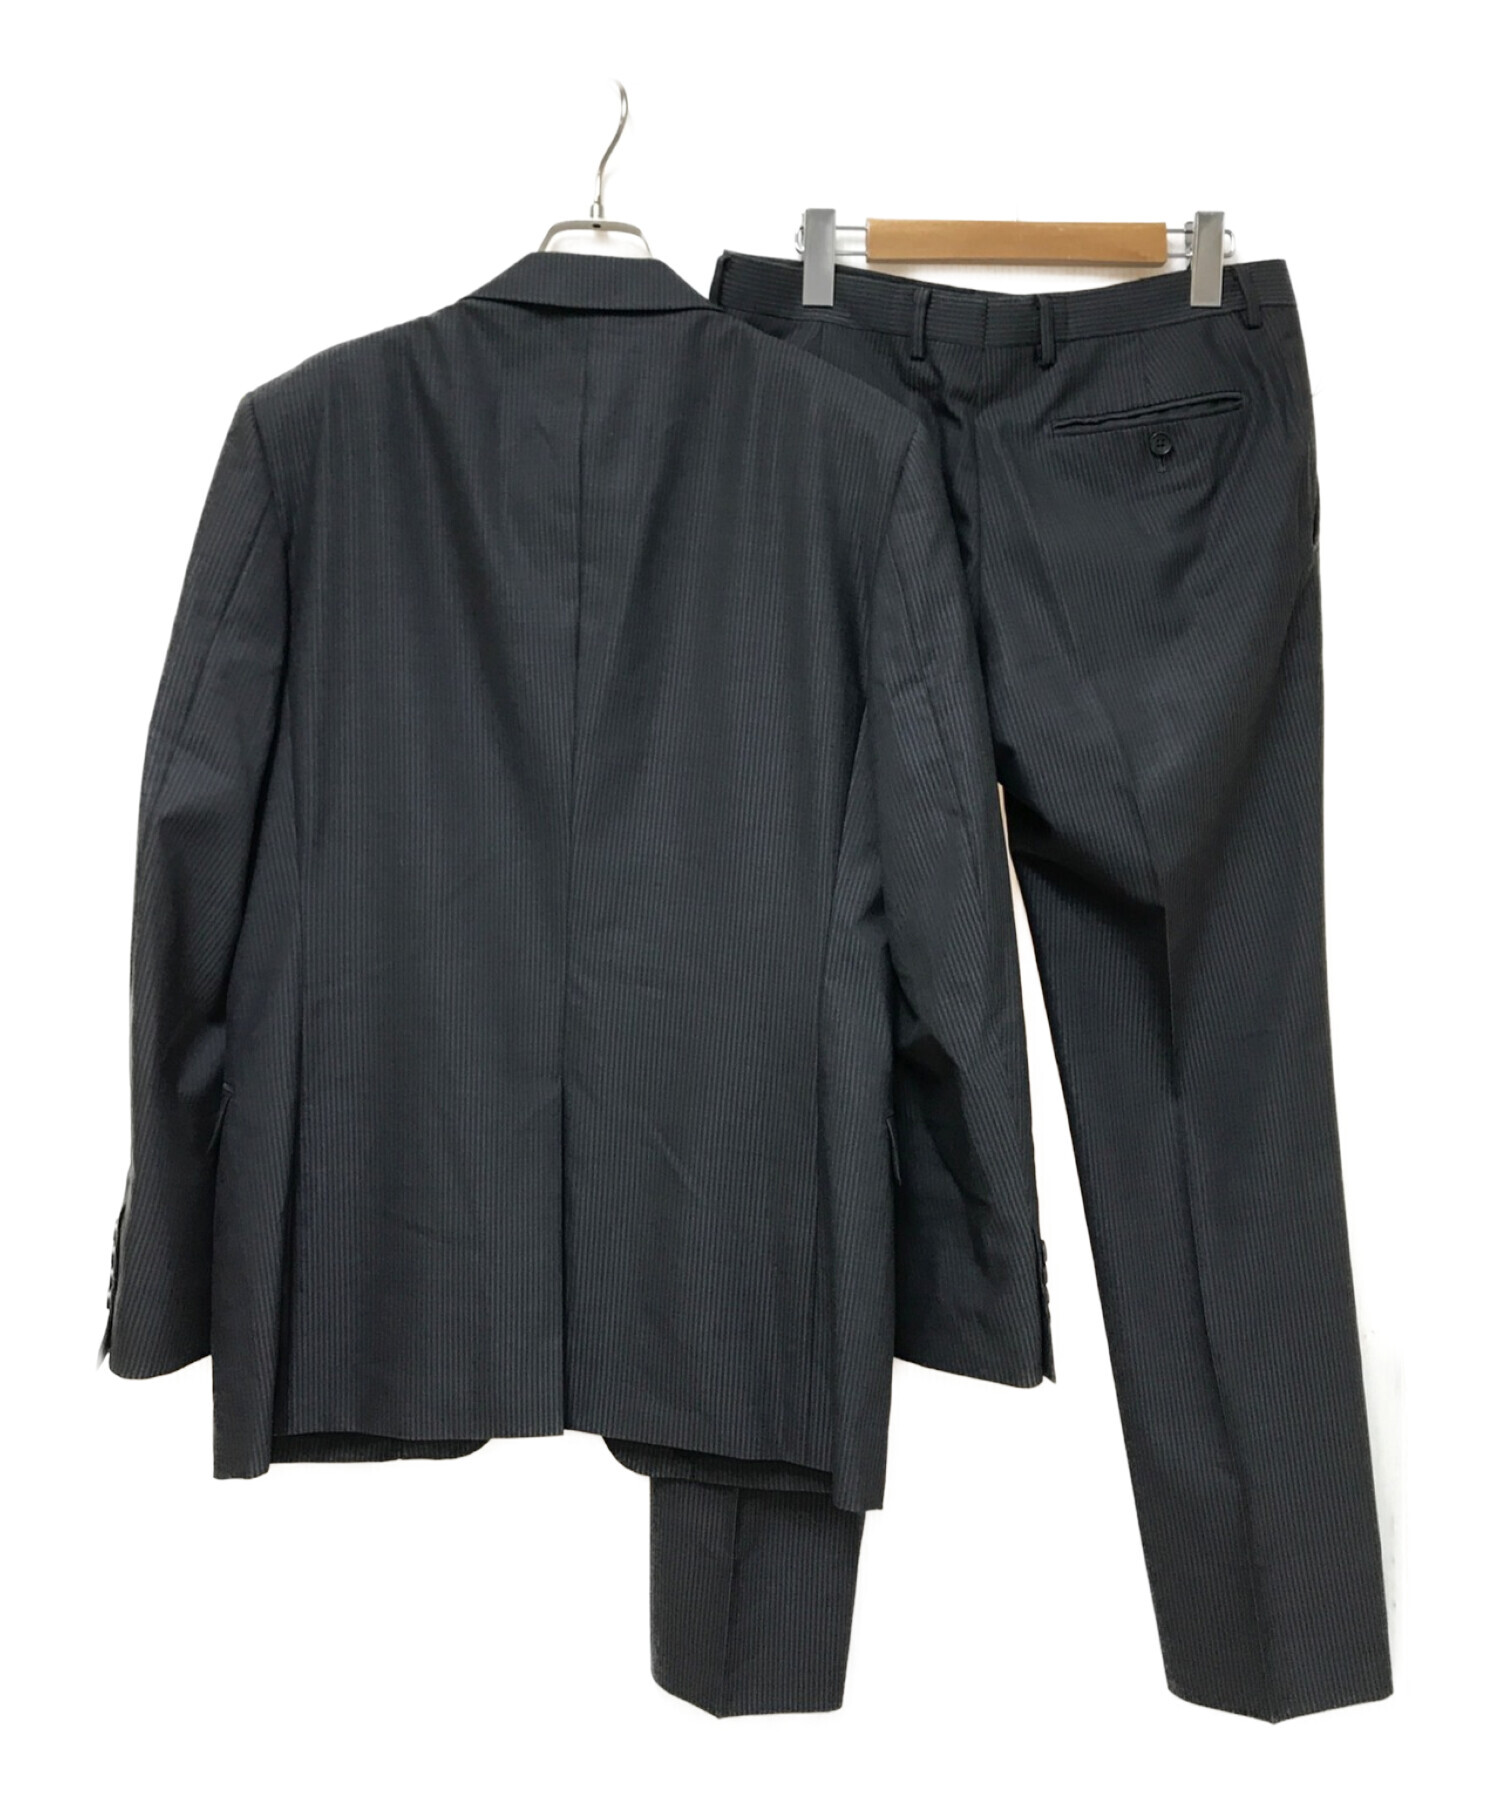 Calvin Klein (カルバンクライン) セットアップスーツ グレー サイズ:38/W31